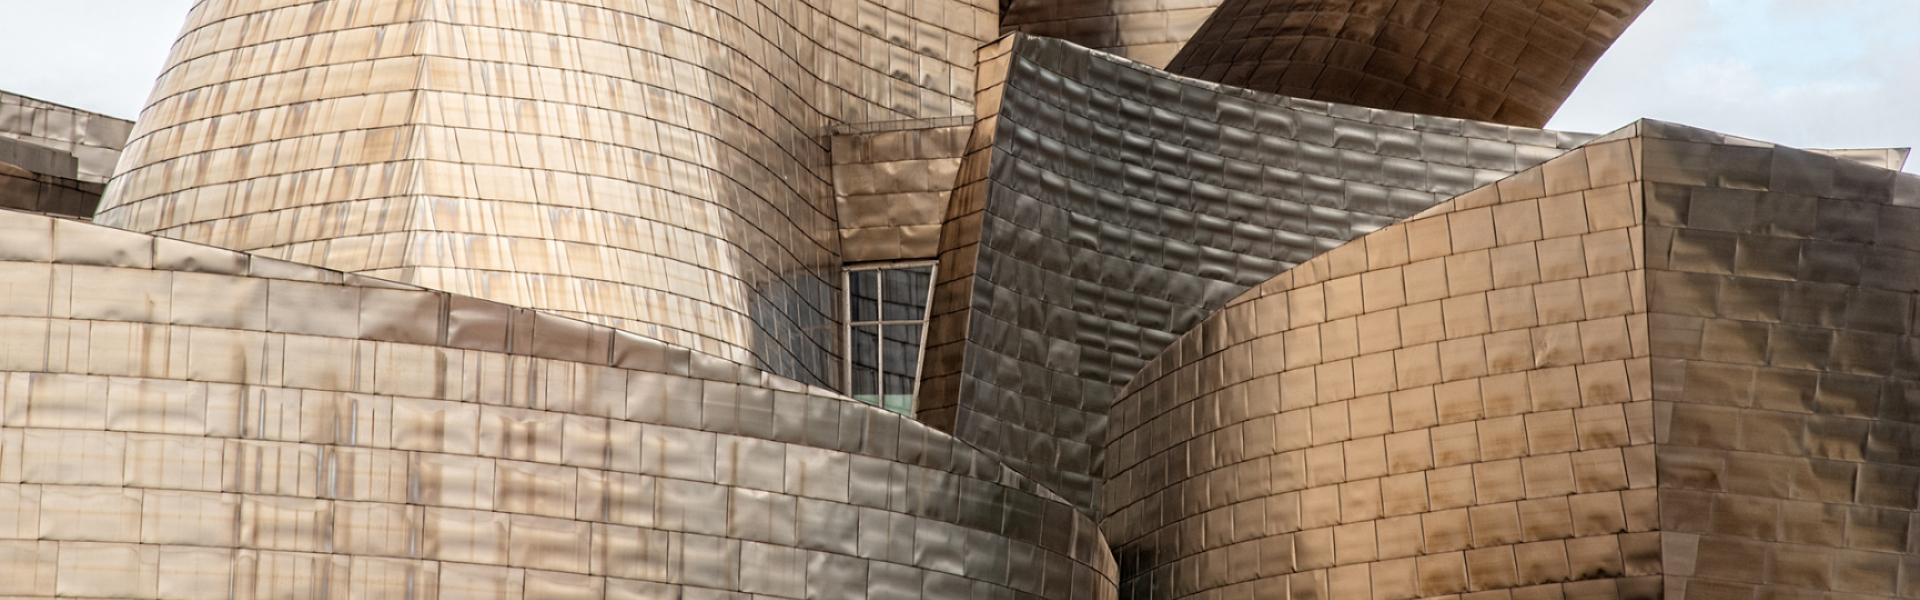 banner_Natalia-Shields-Guggenheim-Bilbao-Titanium-Exterior-2019.20211111004354.jpg